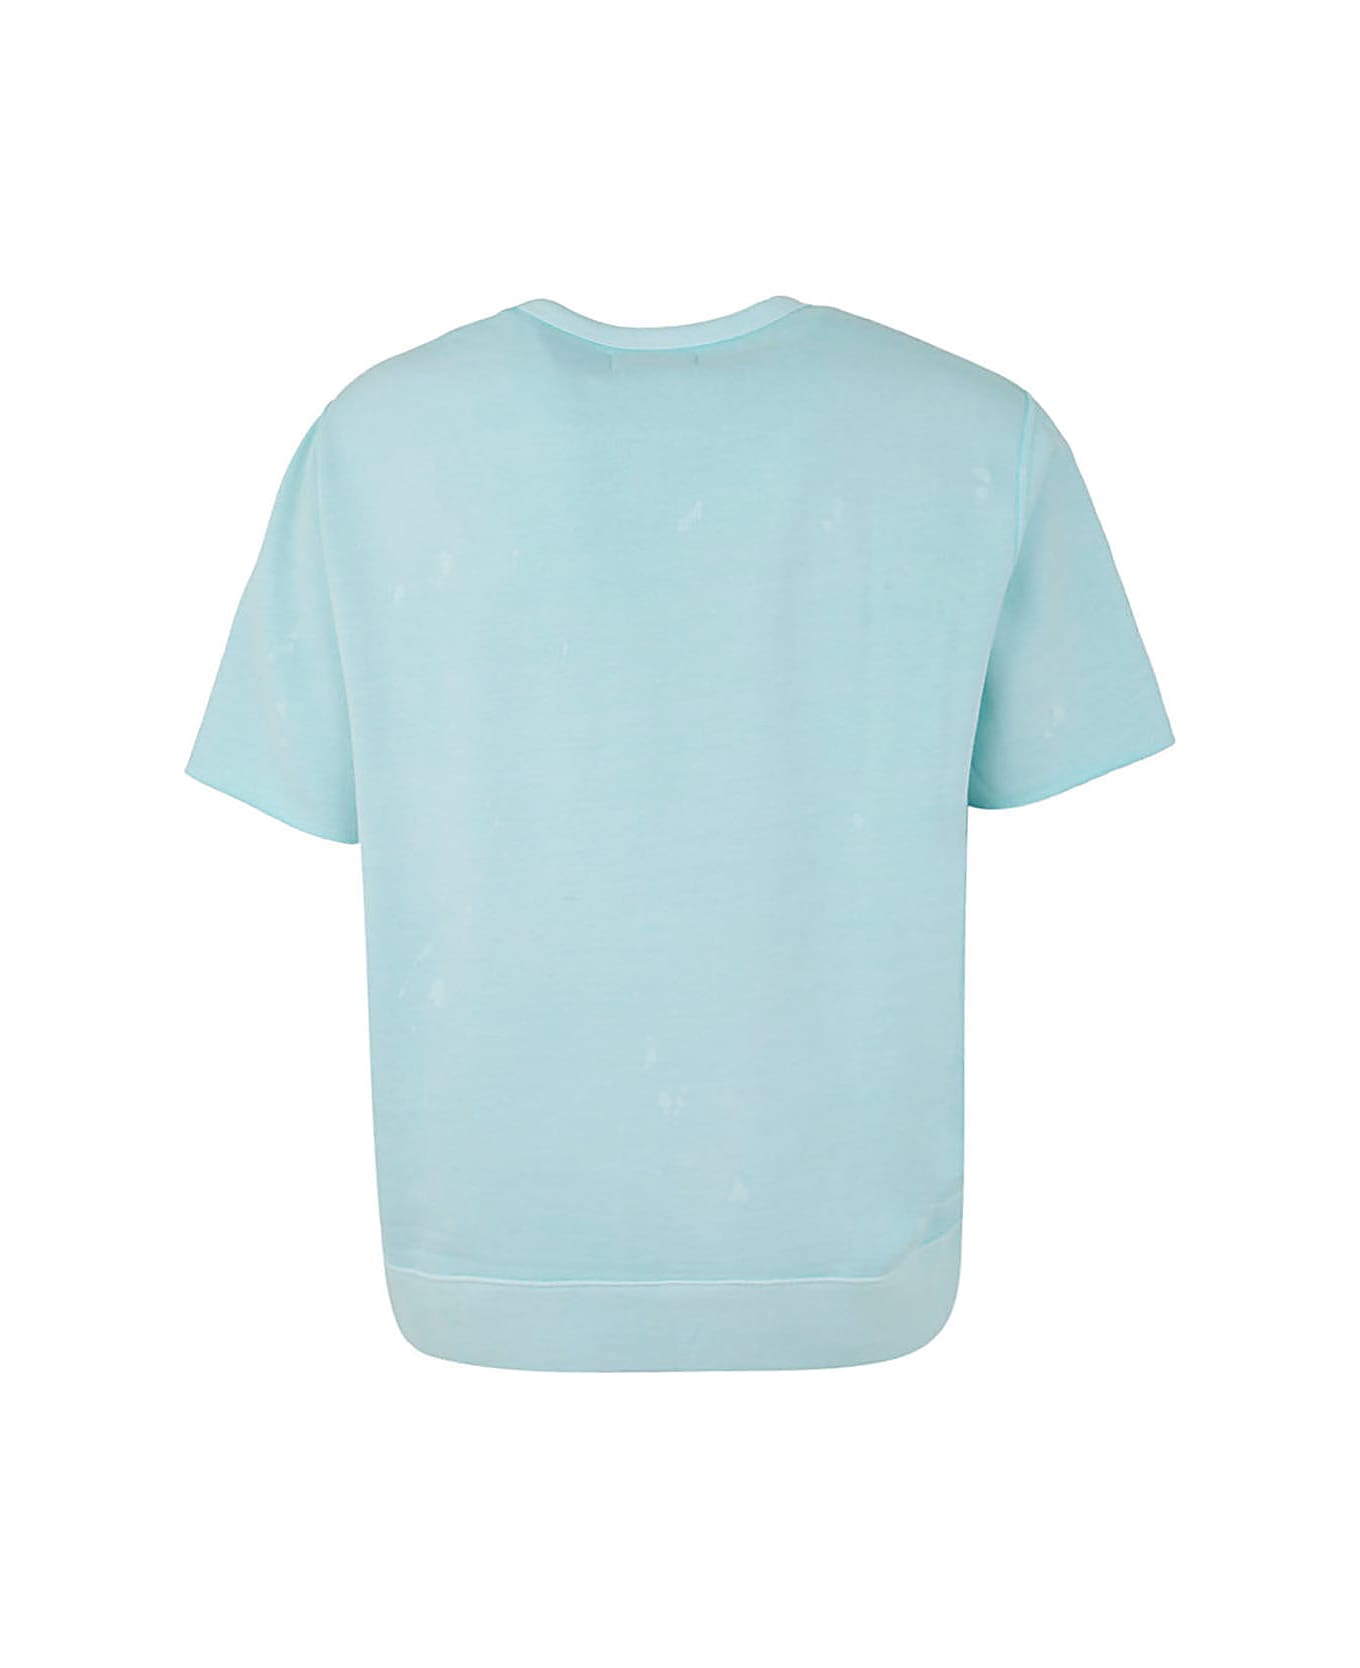 Polo Ralph Lauren Sscnm5 Short Sleeve Sweatshirt - Island Aqua シャツ